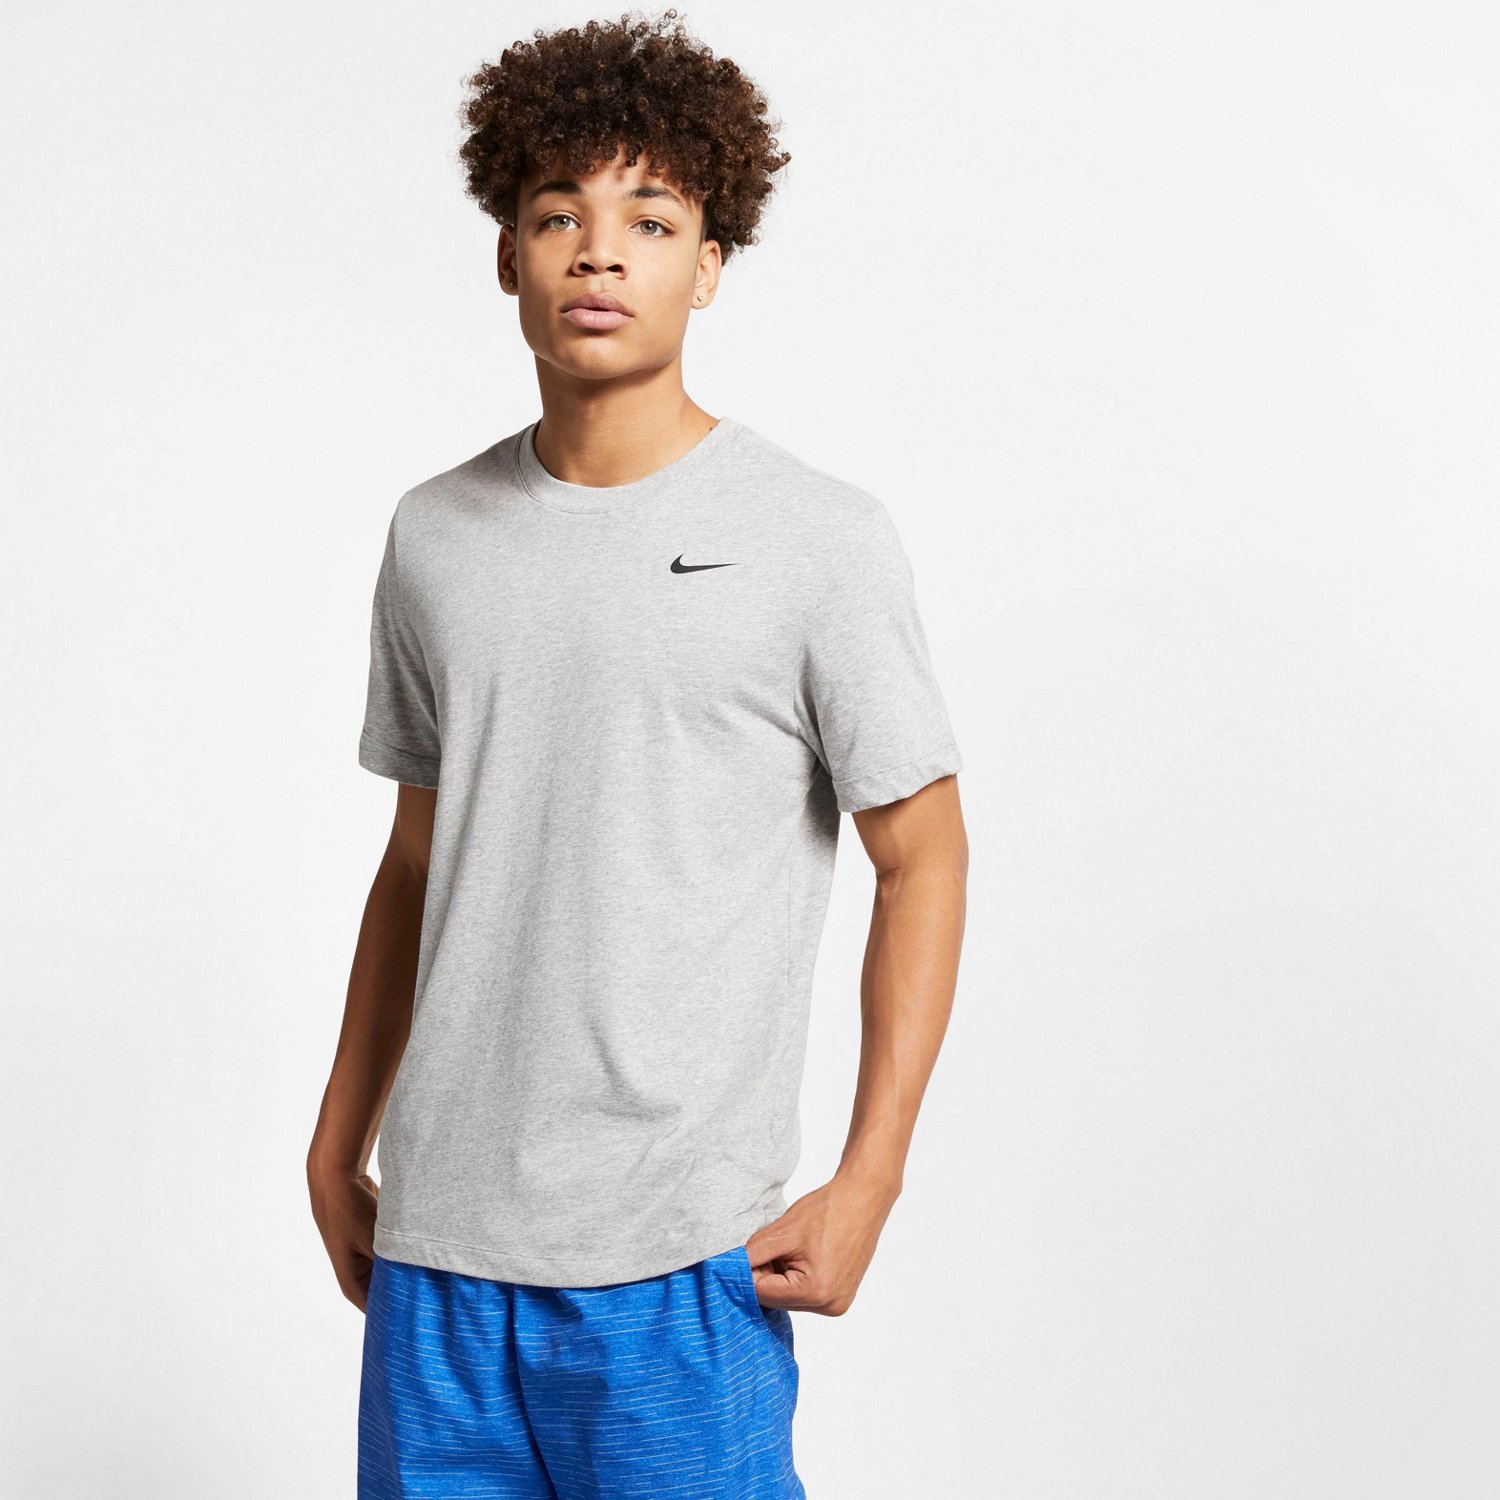 Nike Men's Dri-FIT Training Short Sleeve T-shirt